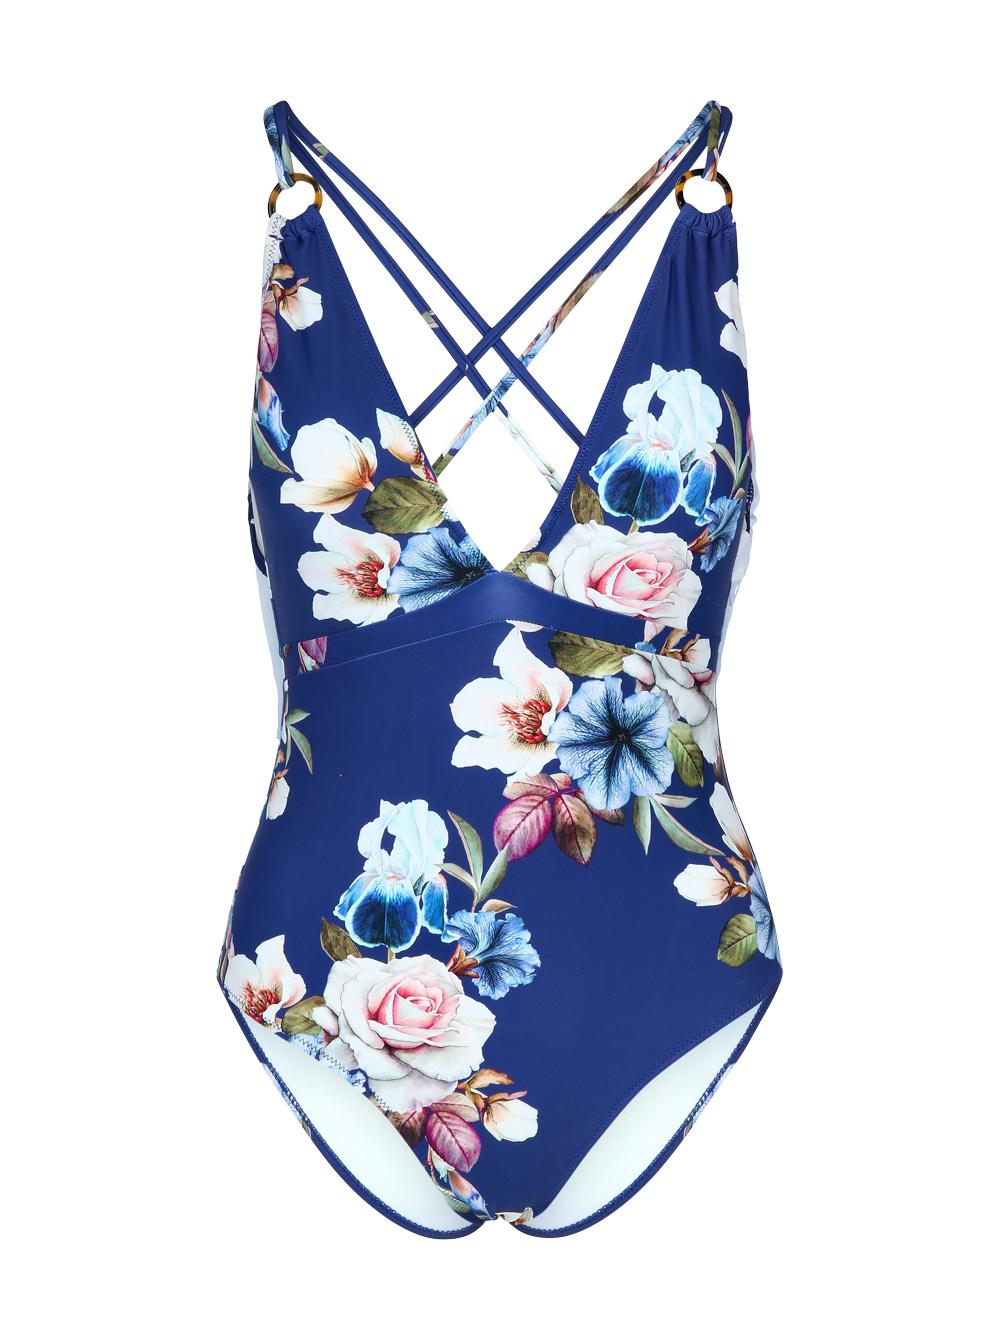 Selected image for CUPSHE Ženski jednodelni kupaći kostim sa cvetnim dezenom J18 teget